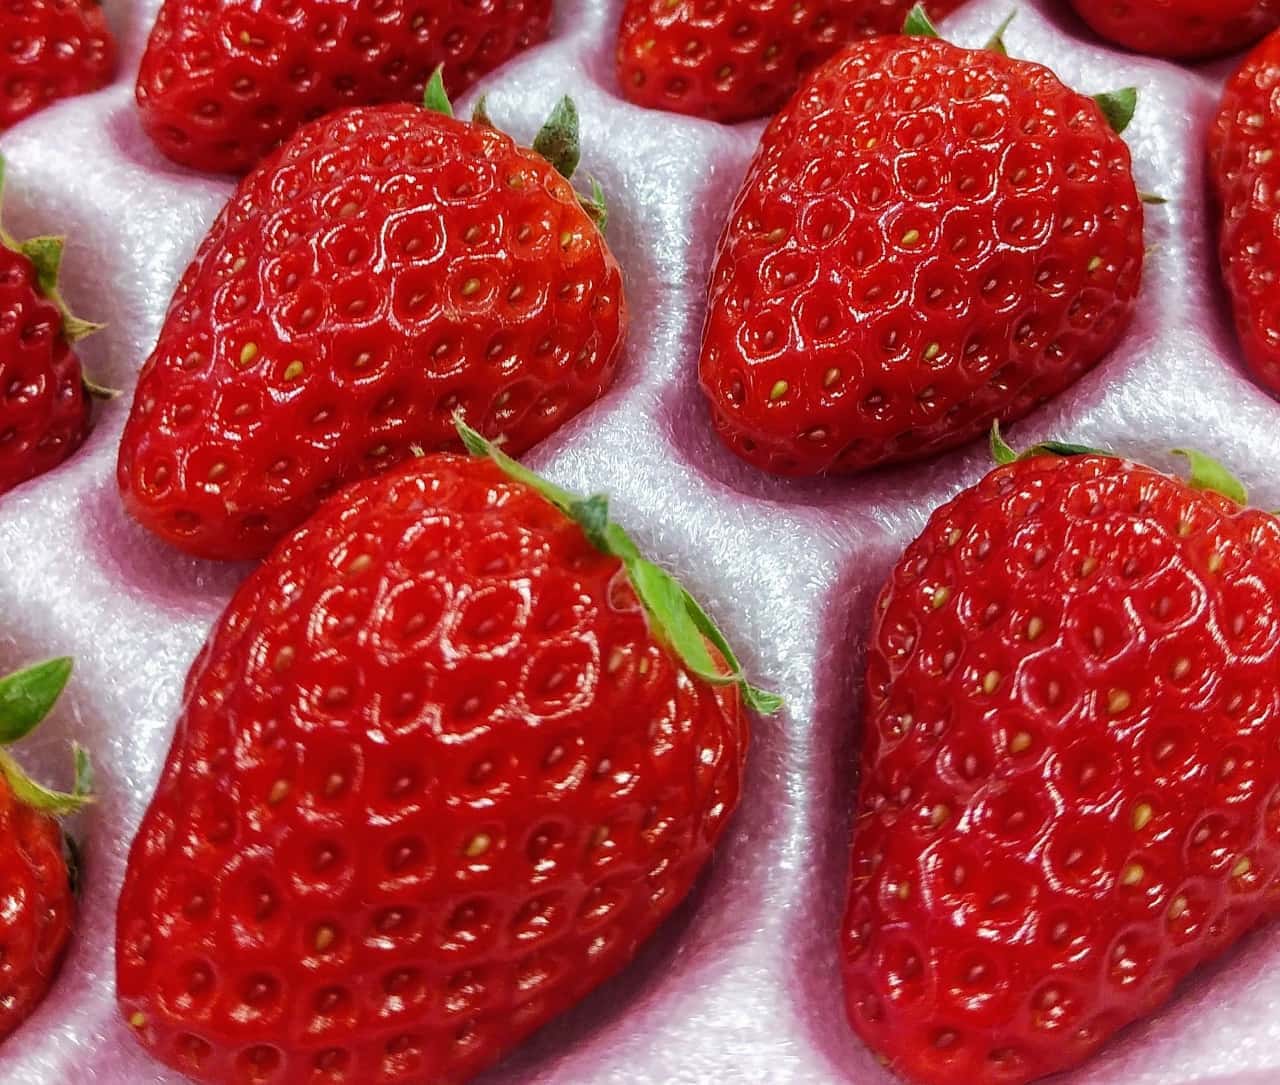 Shizuoka Brand Strawberries "Benihoppe